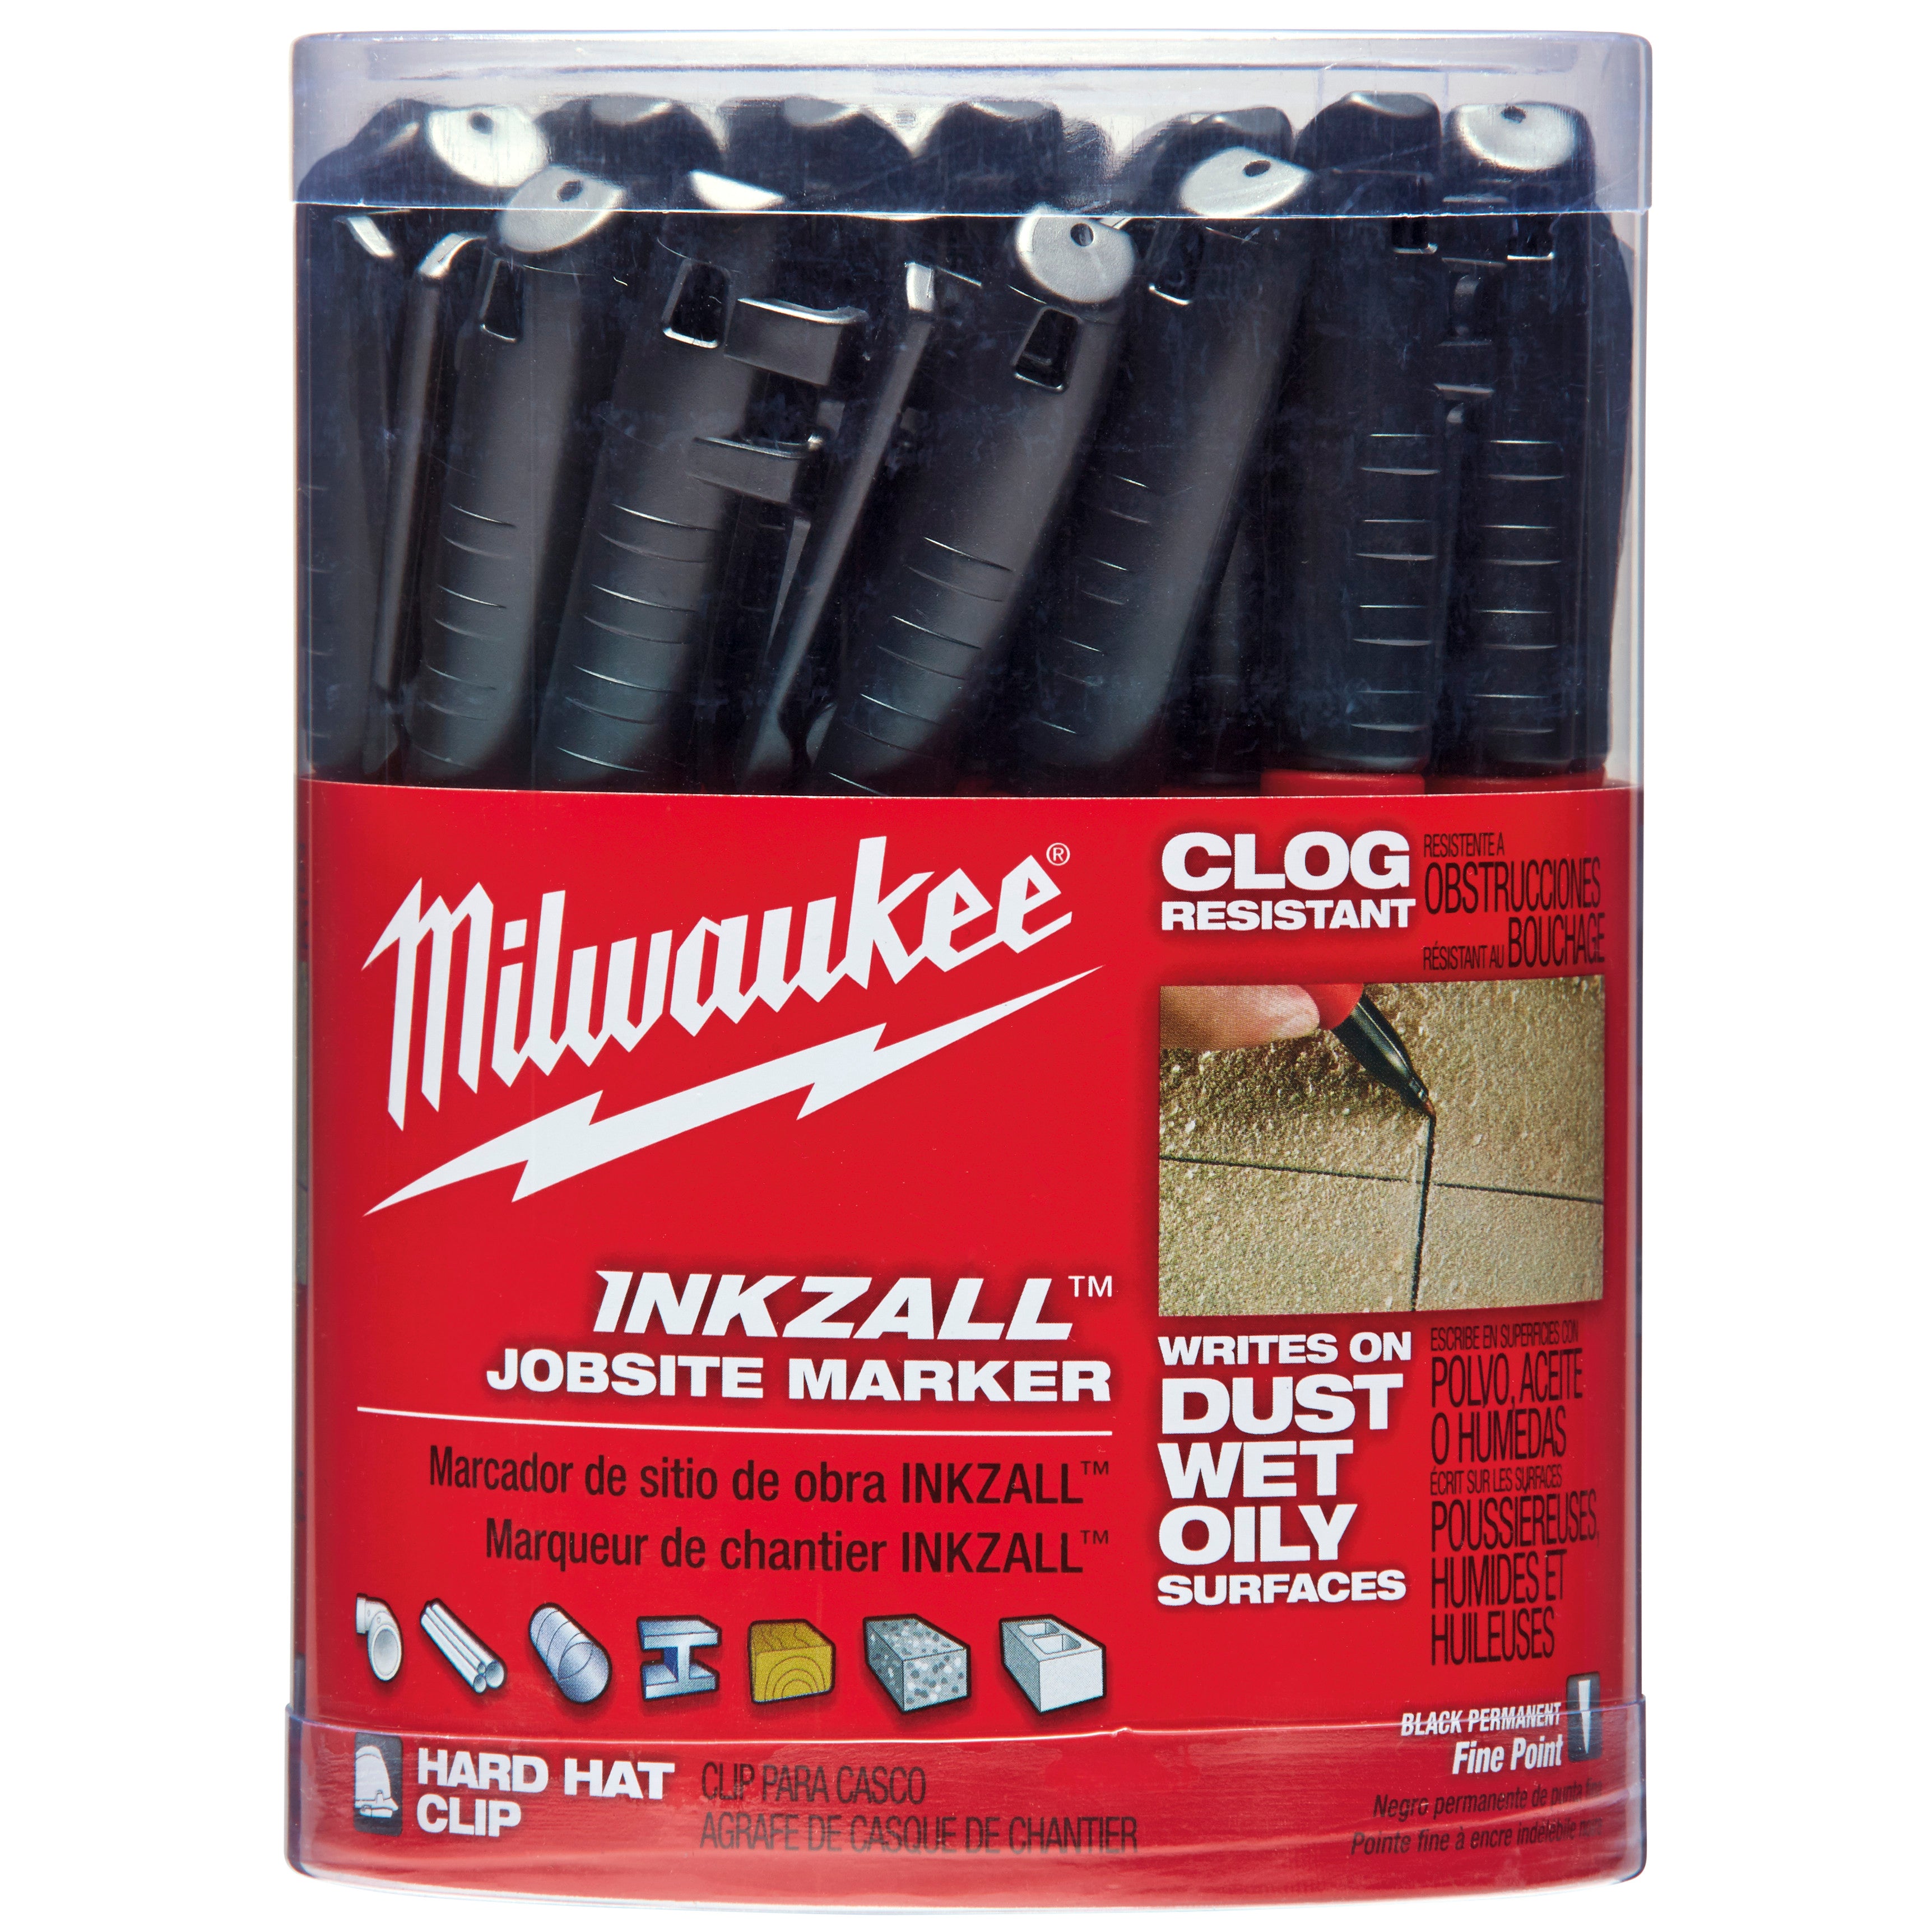 36 Pack of Inkzall Fine Point Black Jobsite Markers.